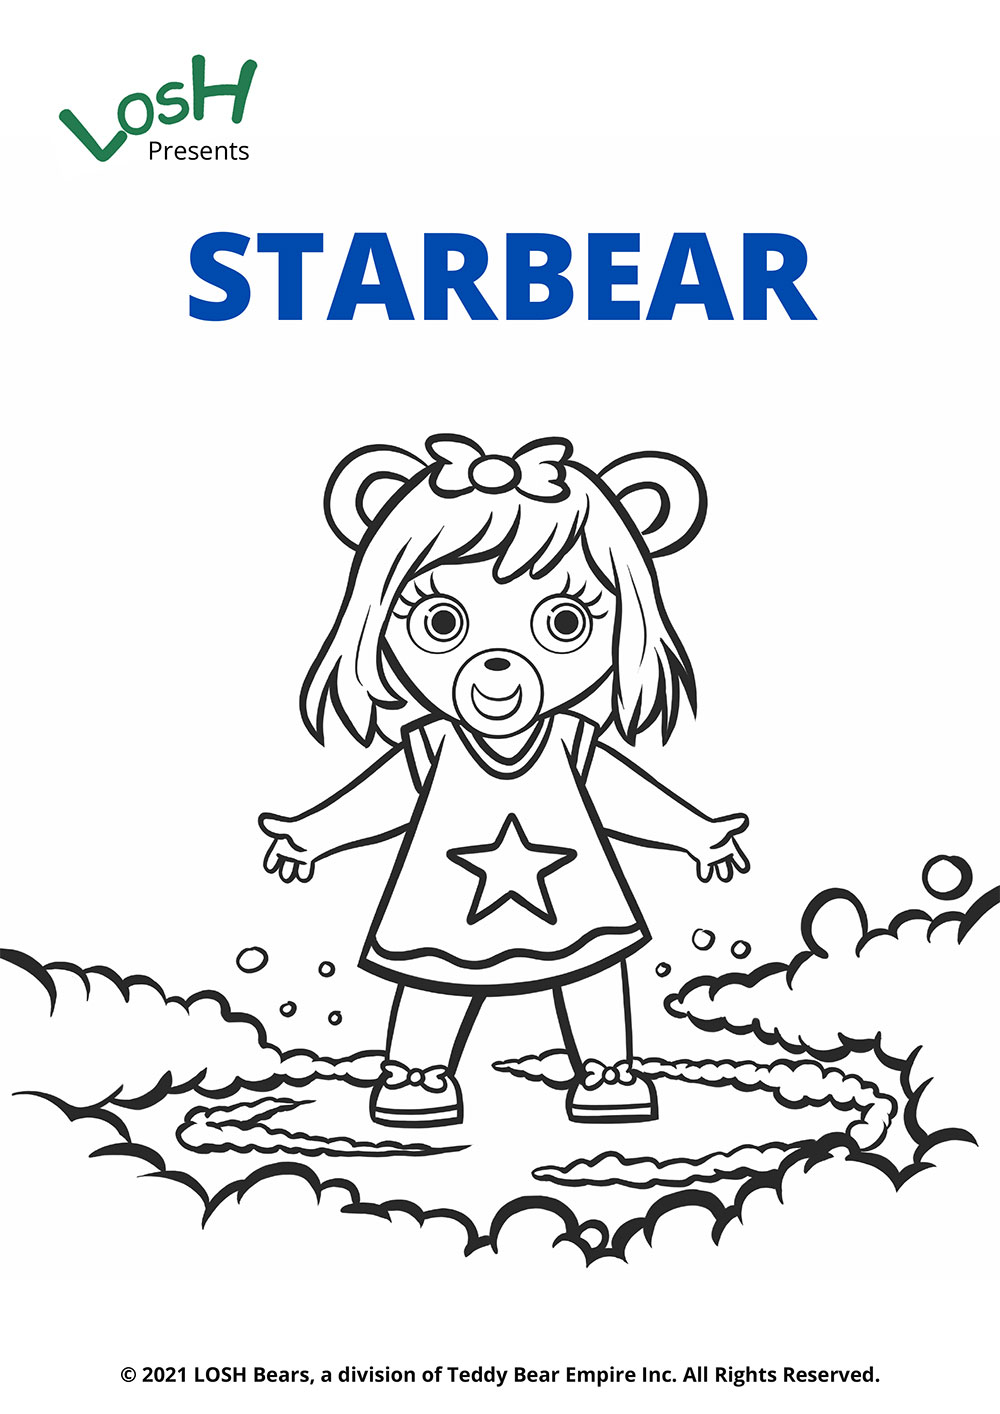 STARBEAR